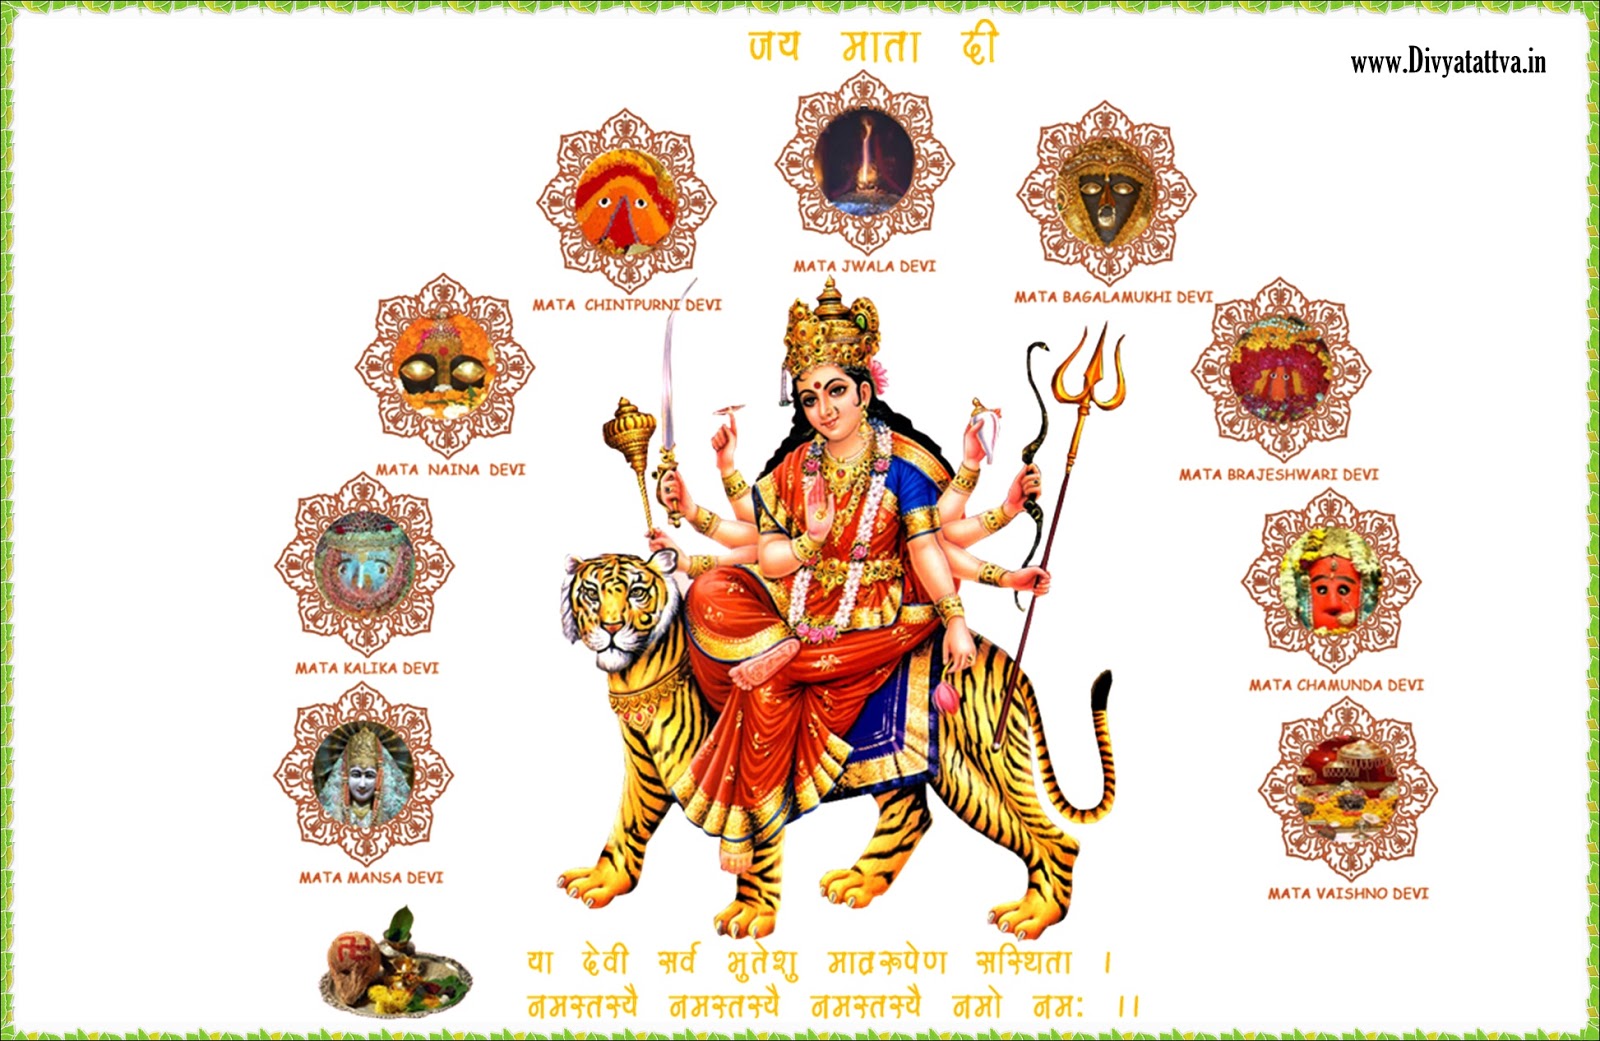 Navratri wallpapers hd ma durga goddess images download free hd wallpapers